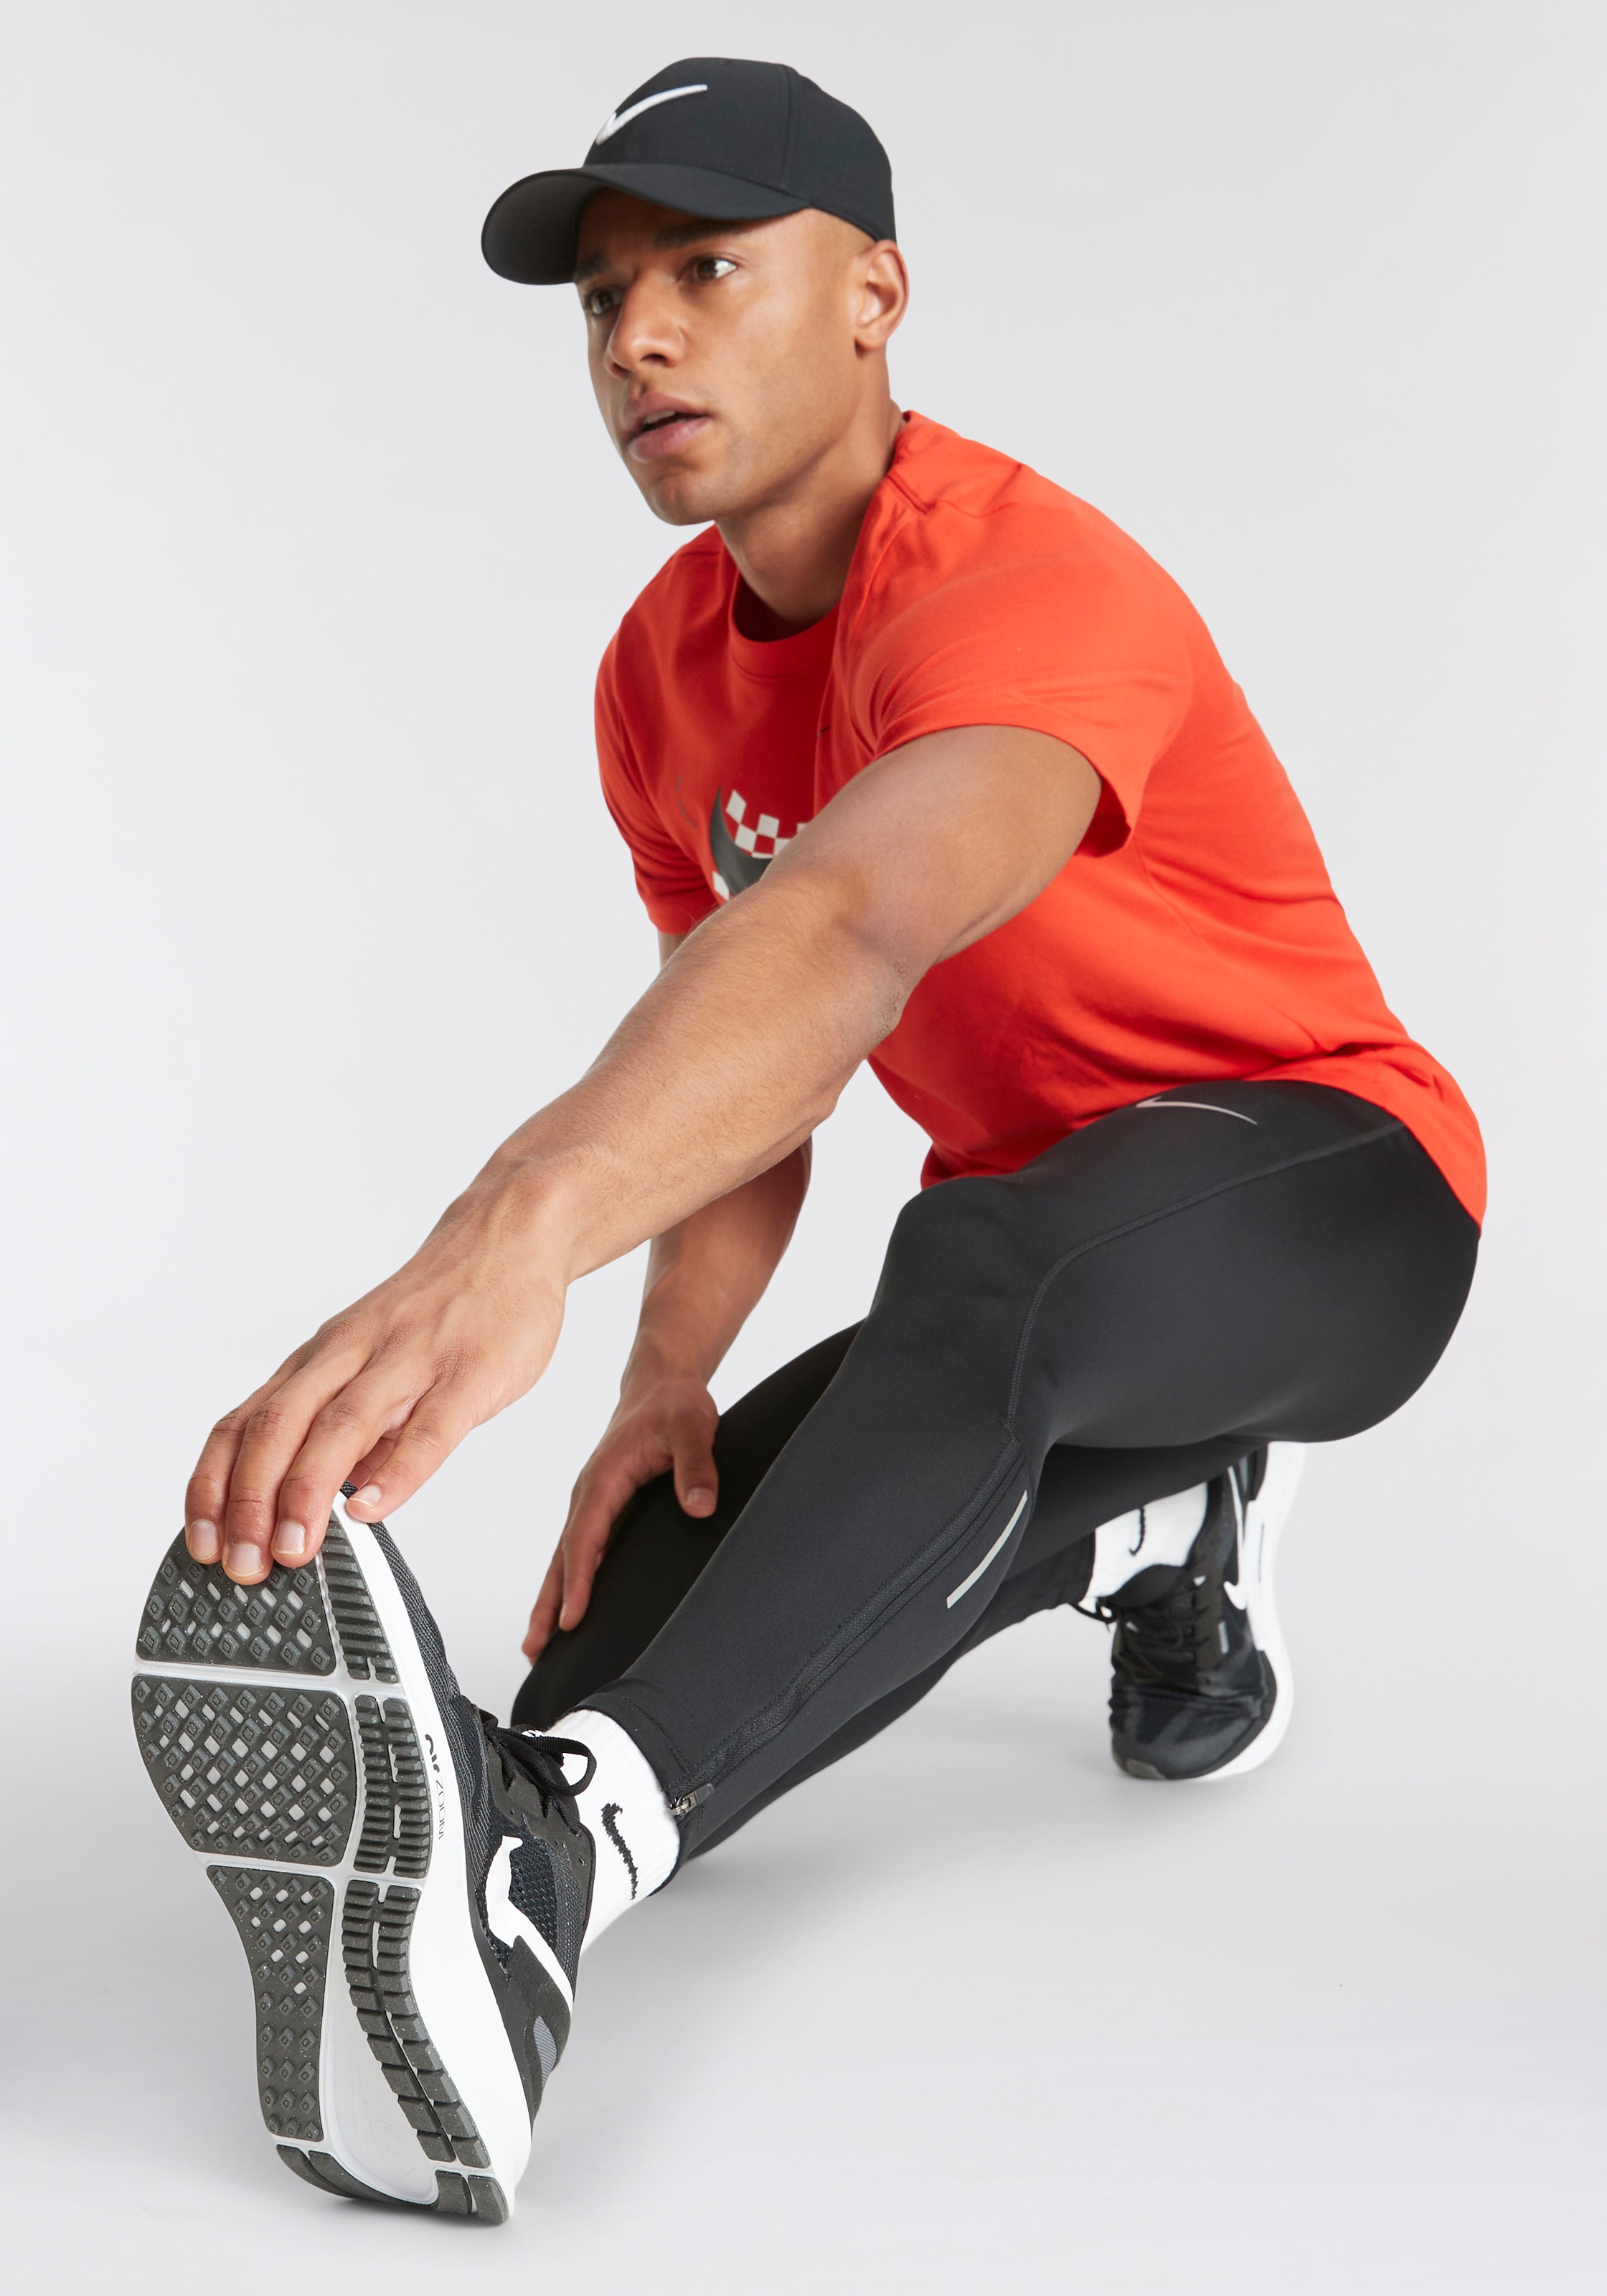 Nike Lauftights »Dri-FIT Challenger Men's Running Tights«